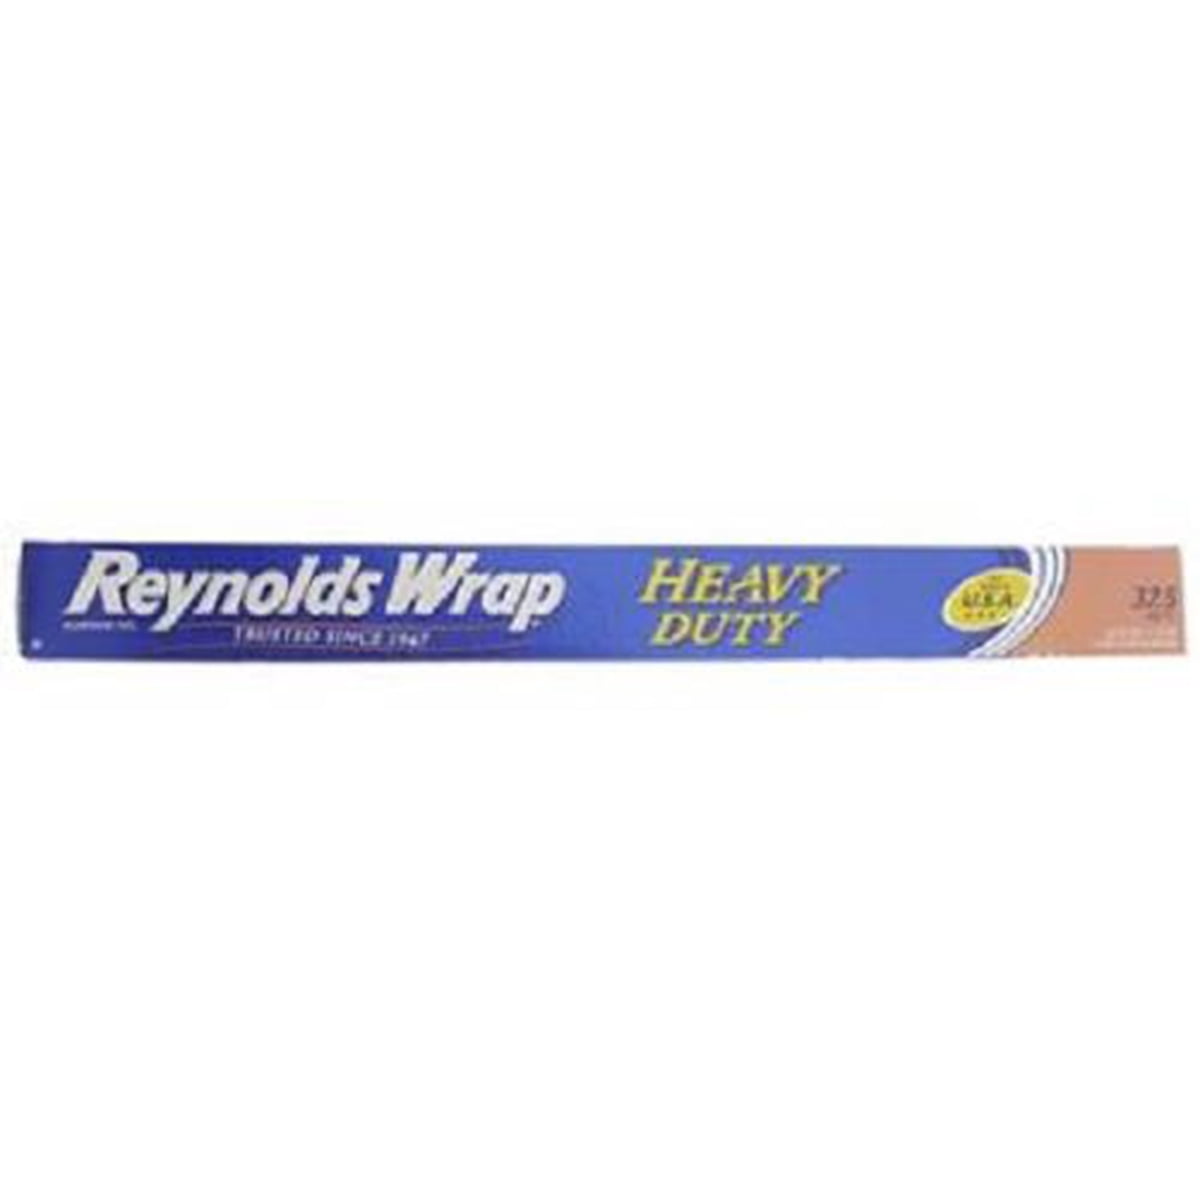 Reynolds Wrap Aluminum Foil Pack of 3 75 Square Feet 